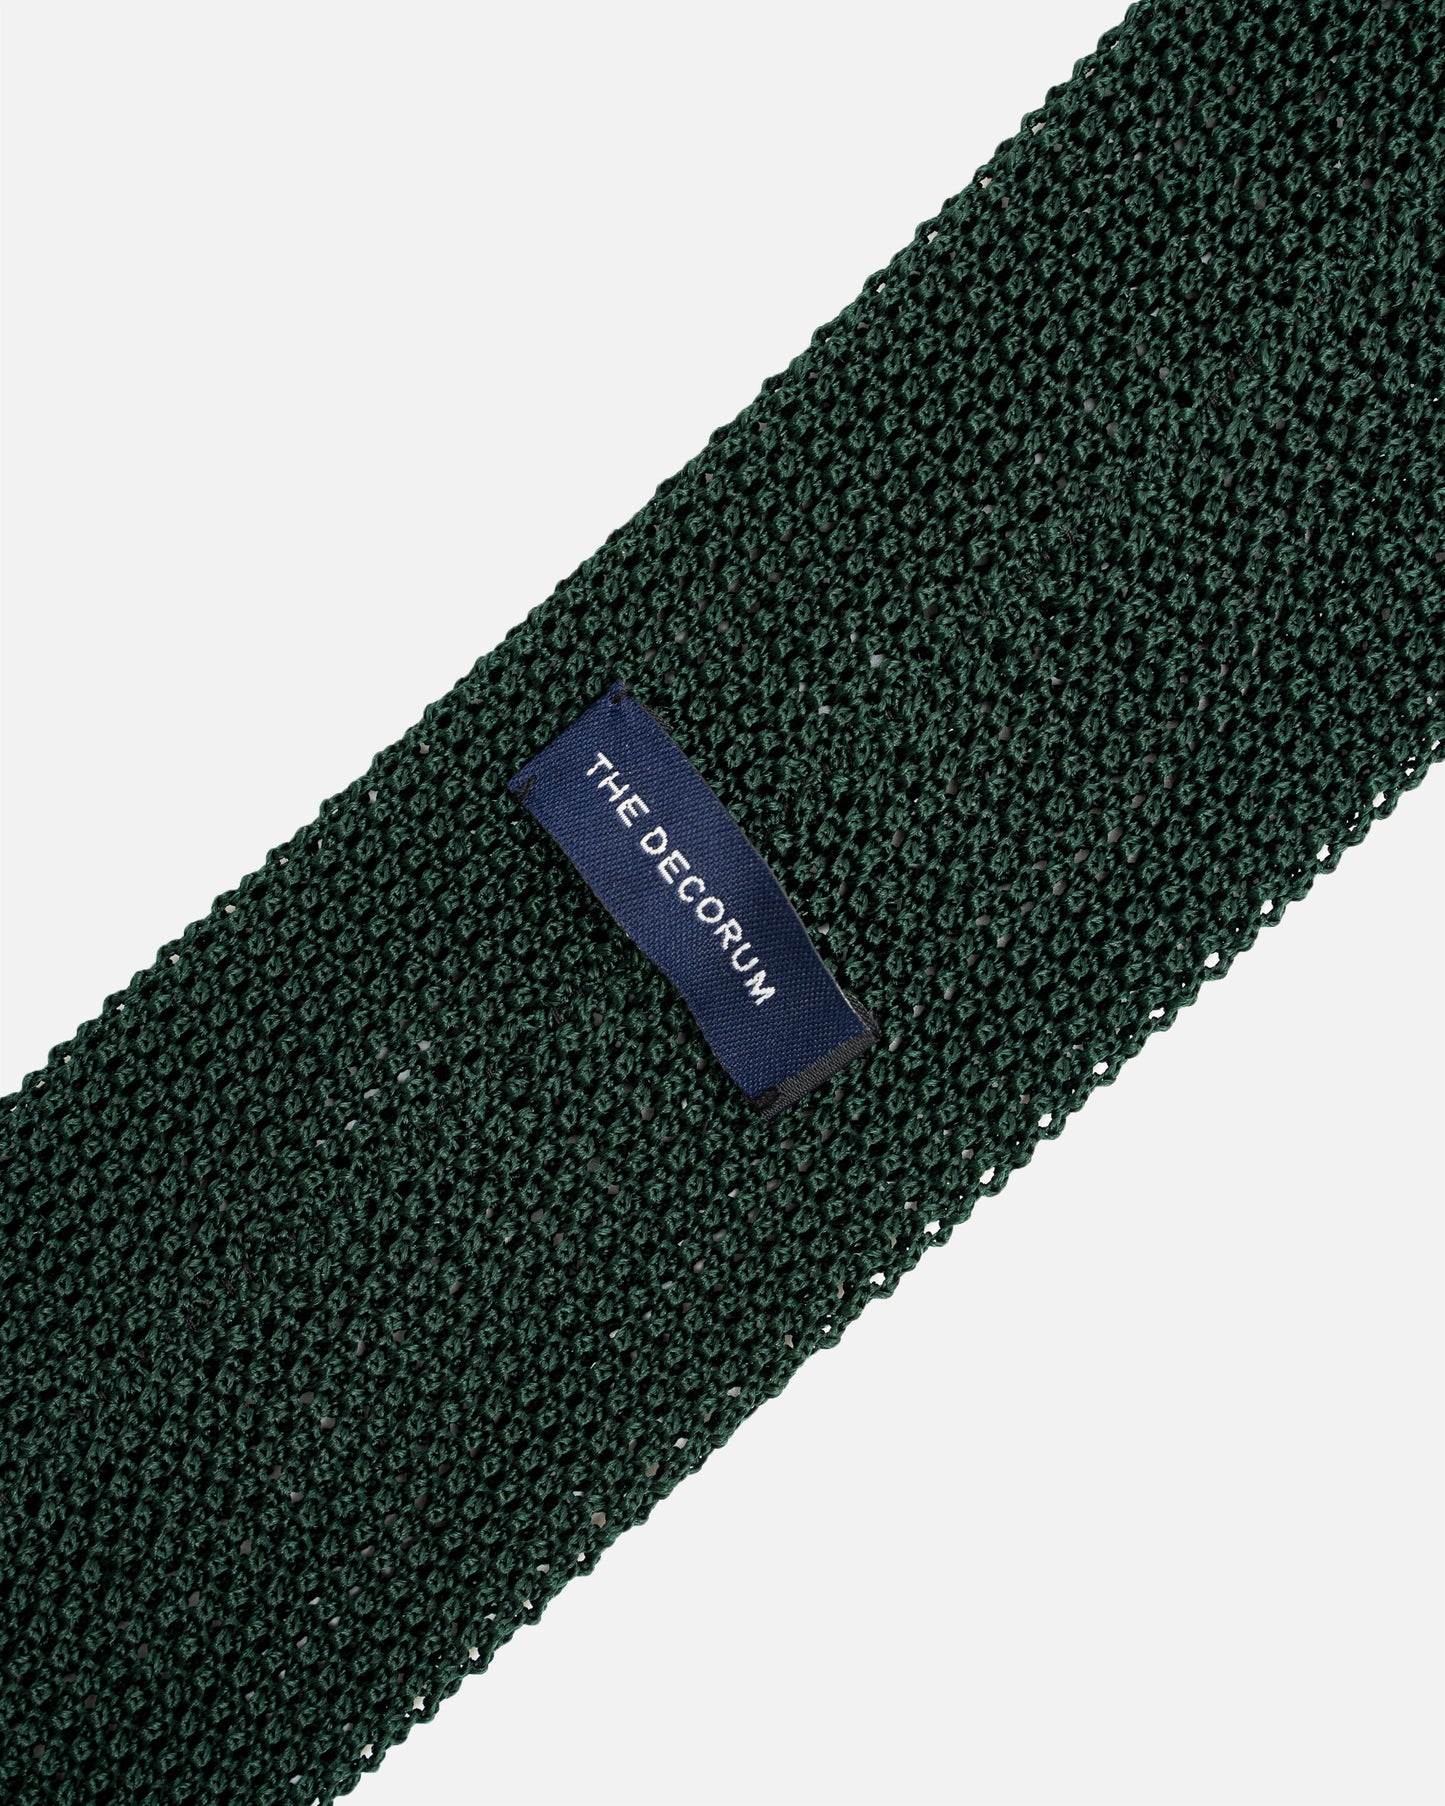 The Decorum Knit Tie in Forest Green